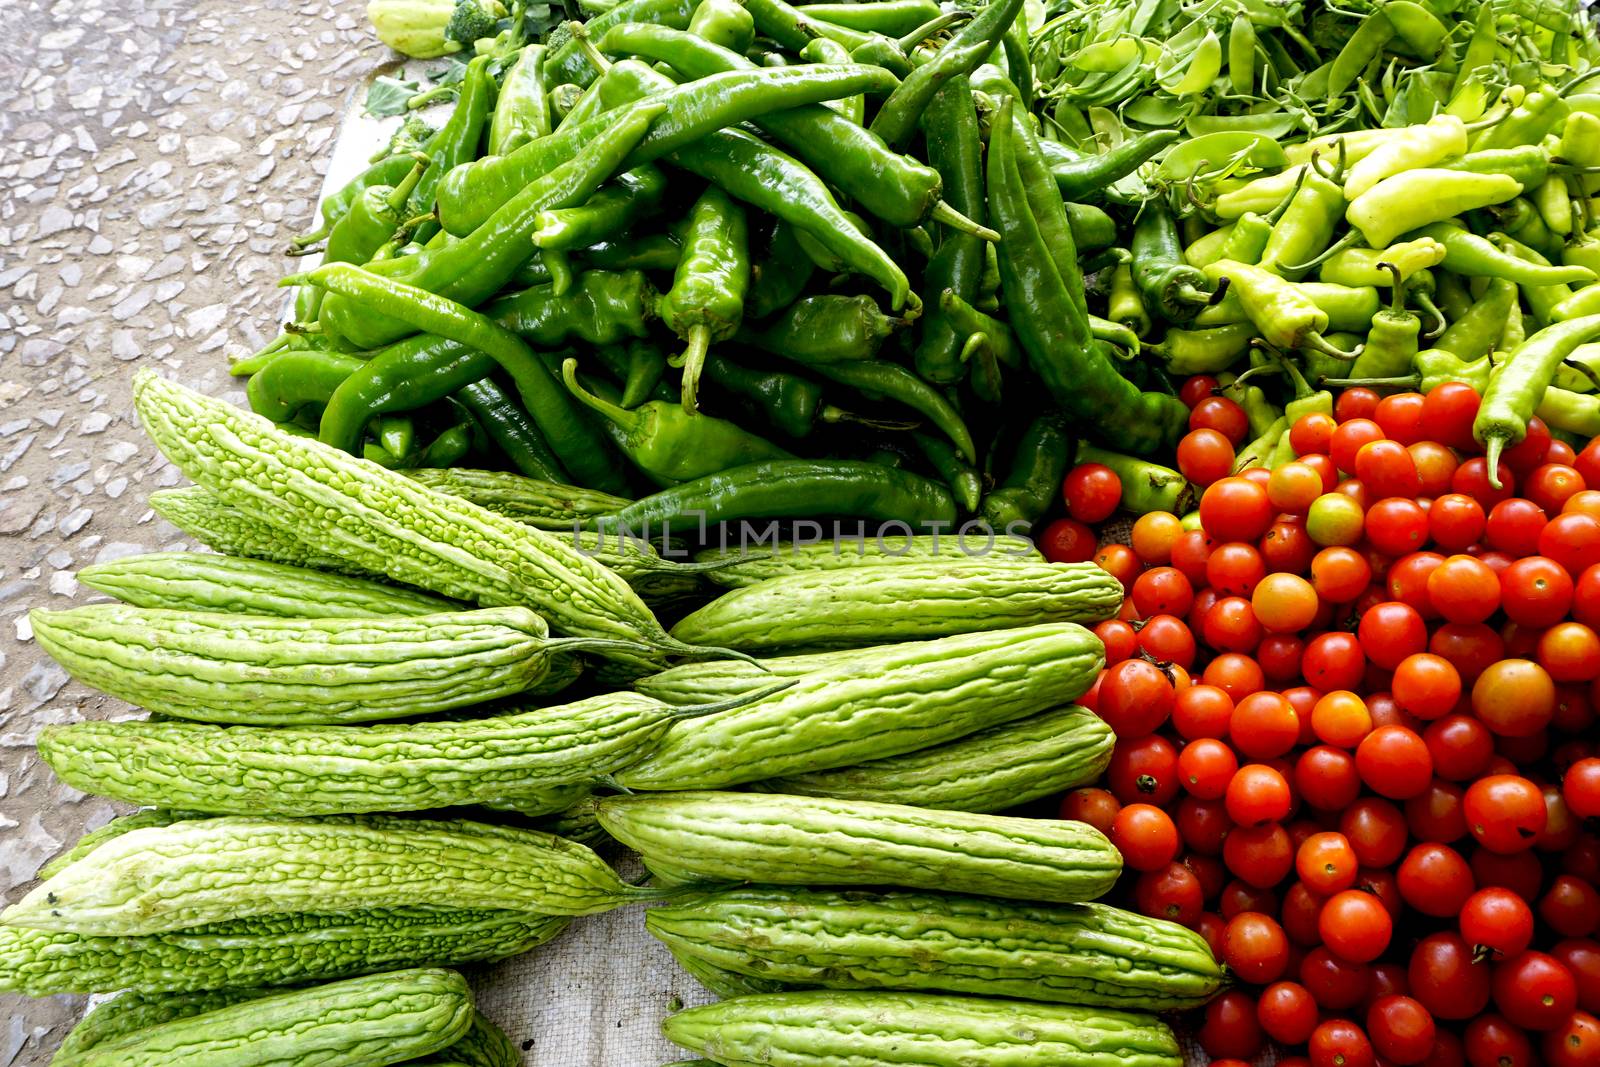 mixed vegetables in Farmer market by polarbearstudio